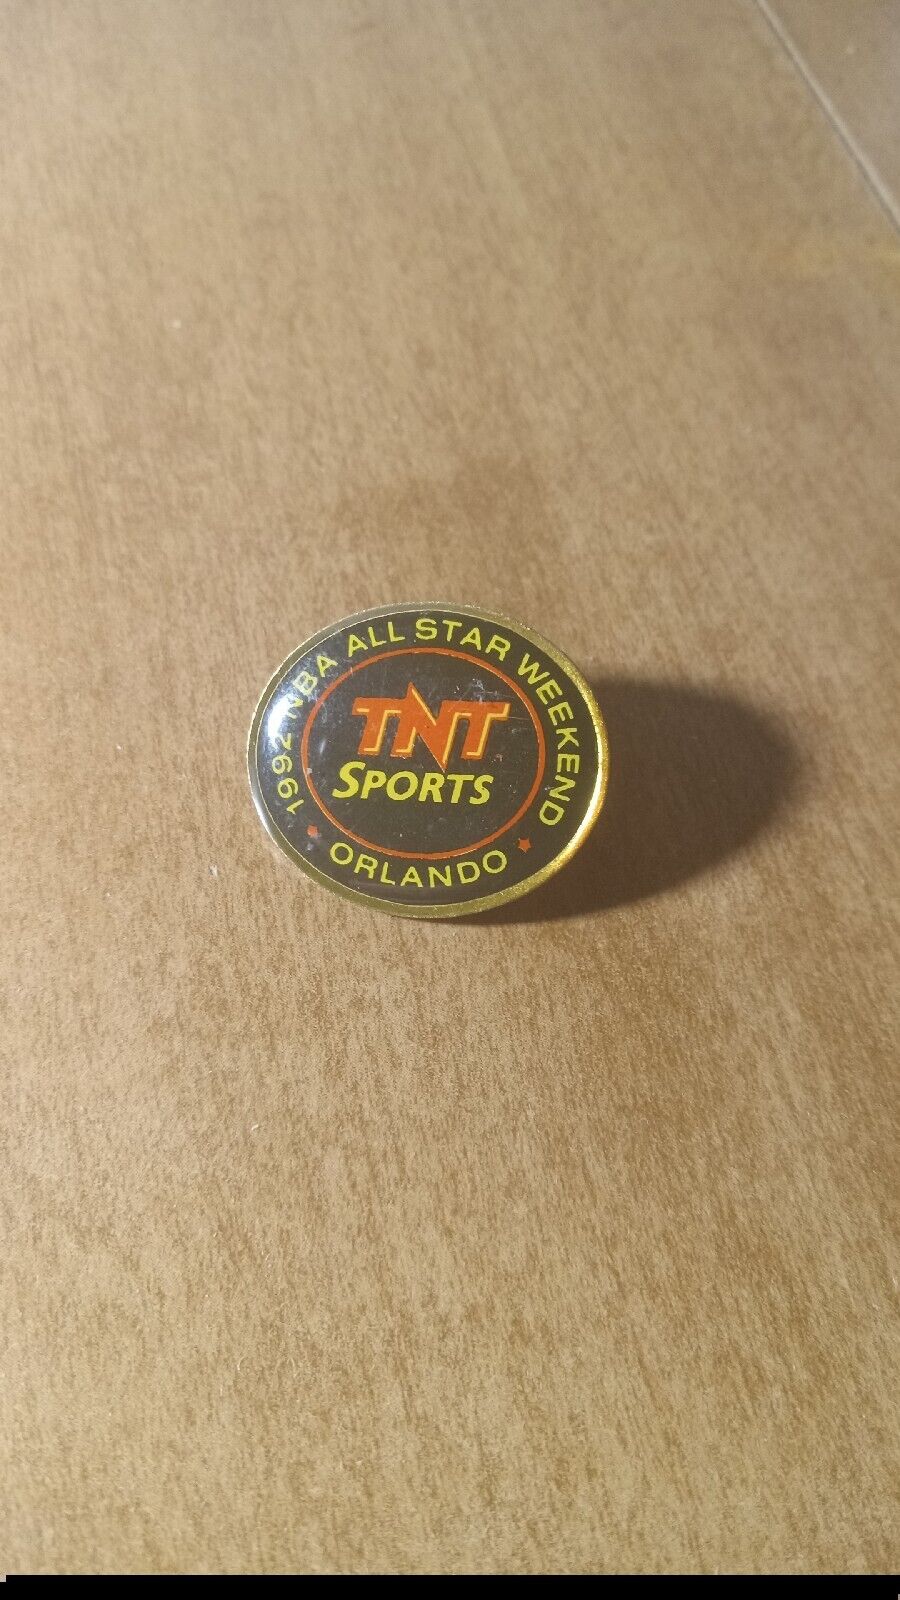 Vintage TNT Sports NBA All Star Weekend Orlando 1992 Hat Pin Lapel Pin